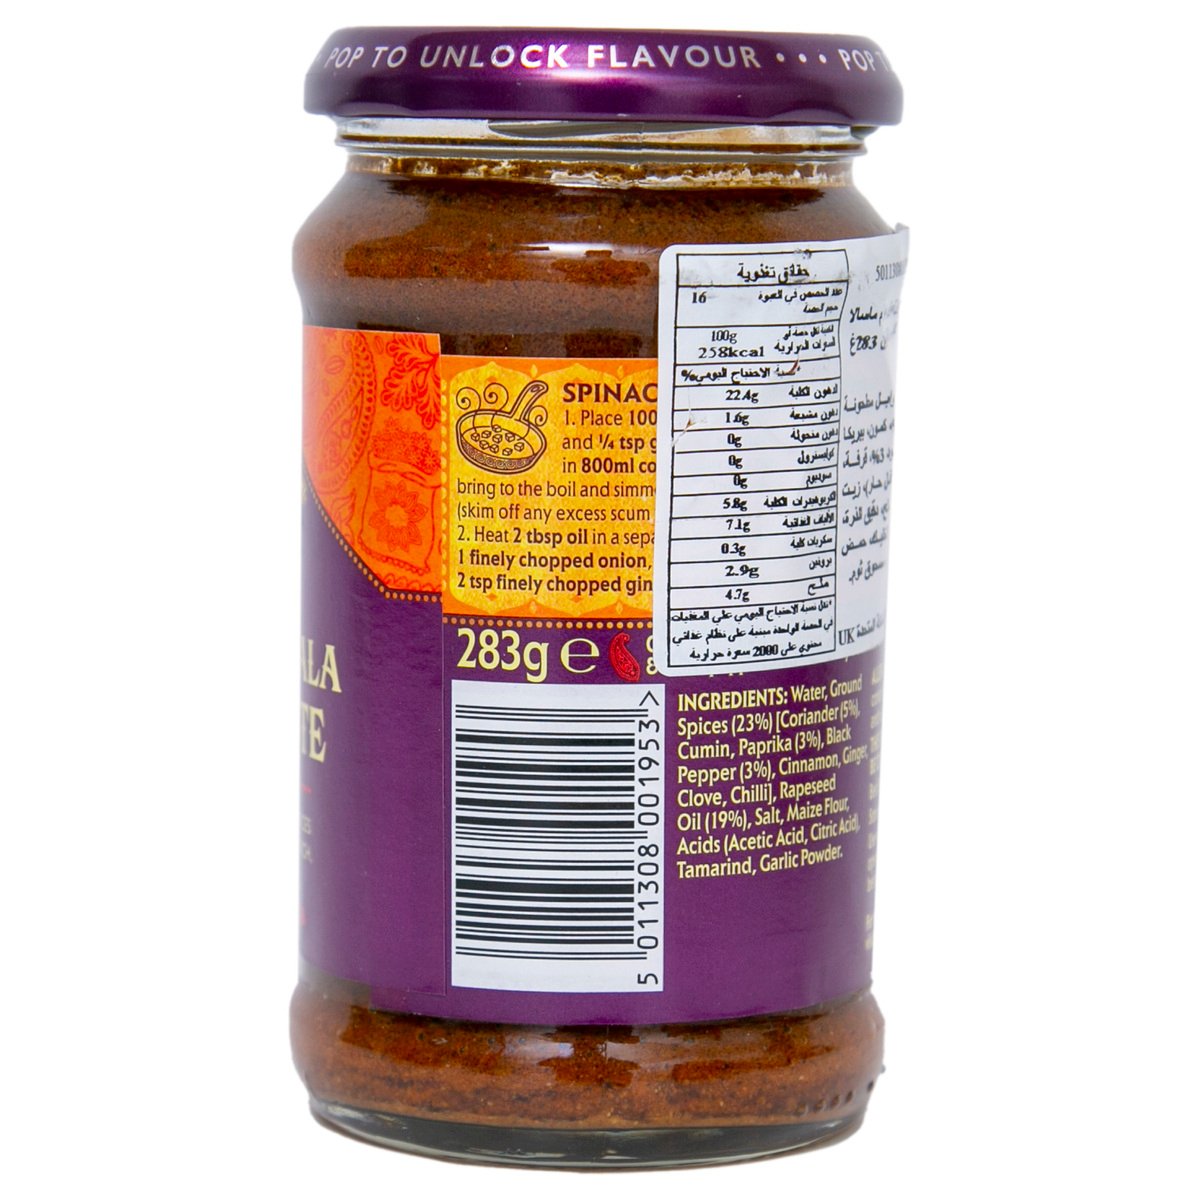 Patak's Garam Masala Spice Paste 283 g